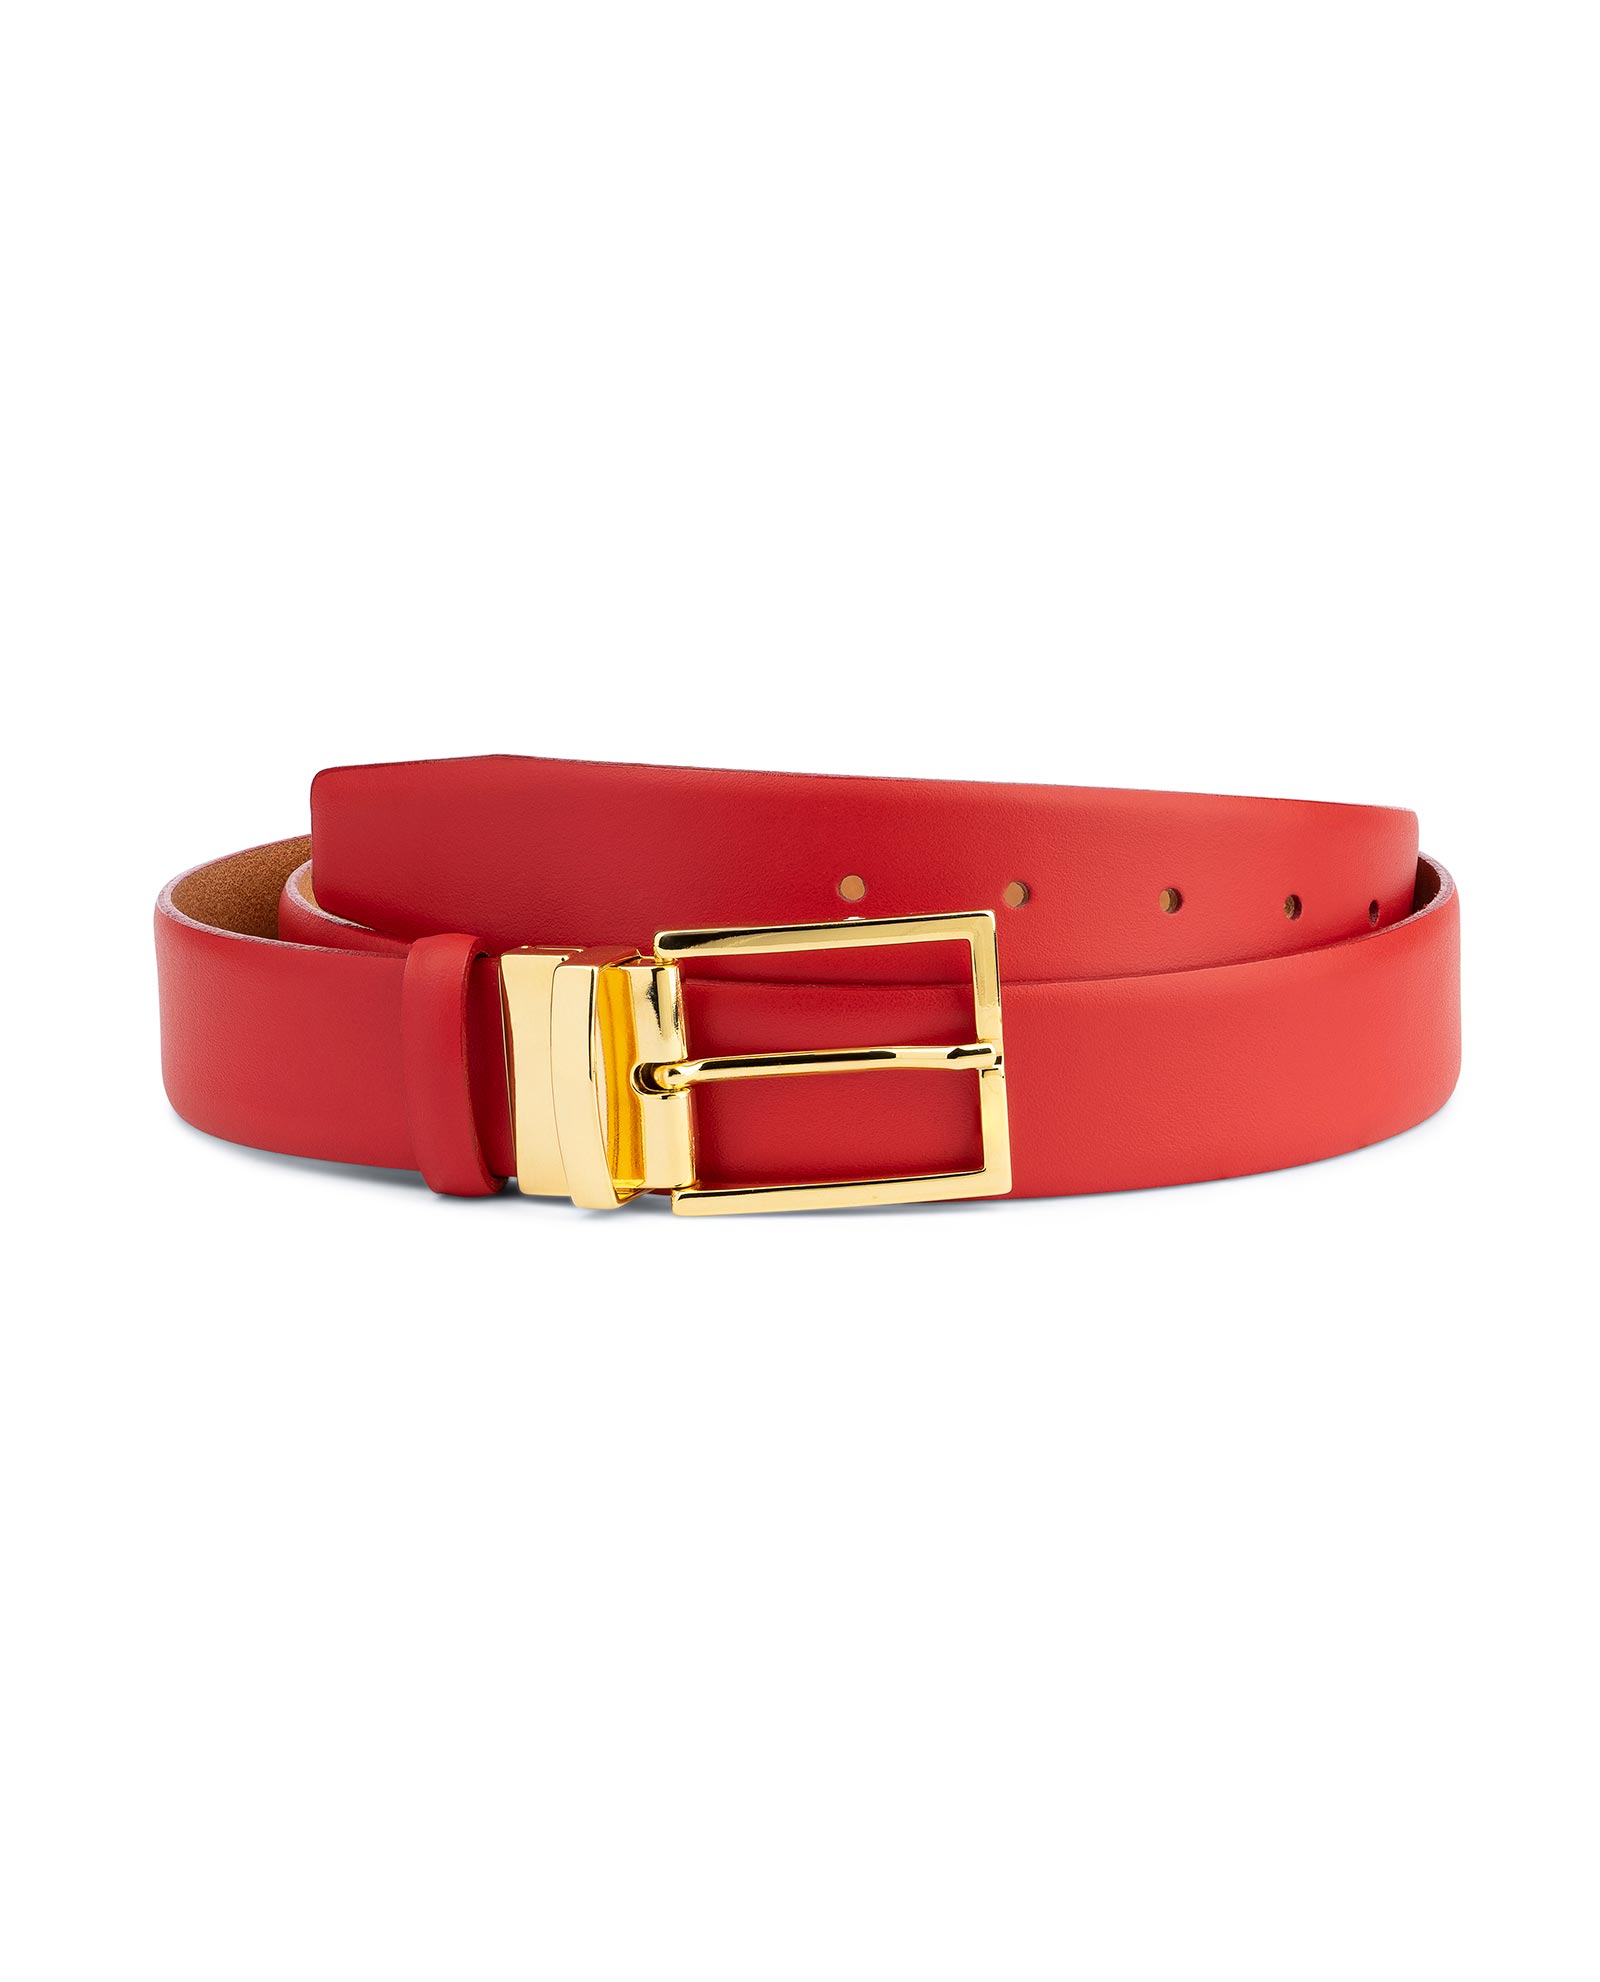 Buy Men's Red Belt With Gold Buckle |